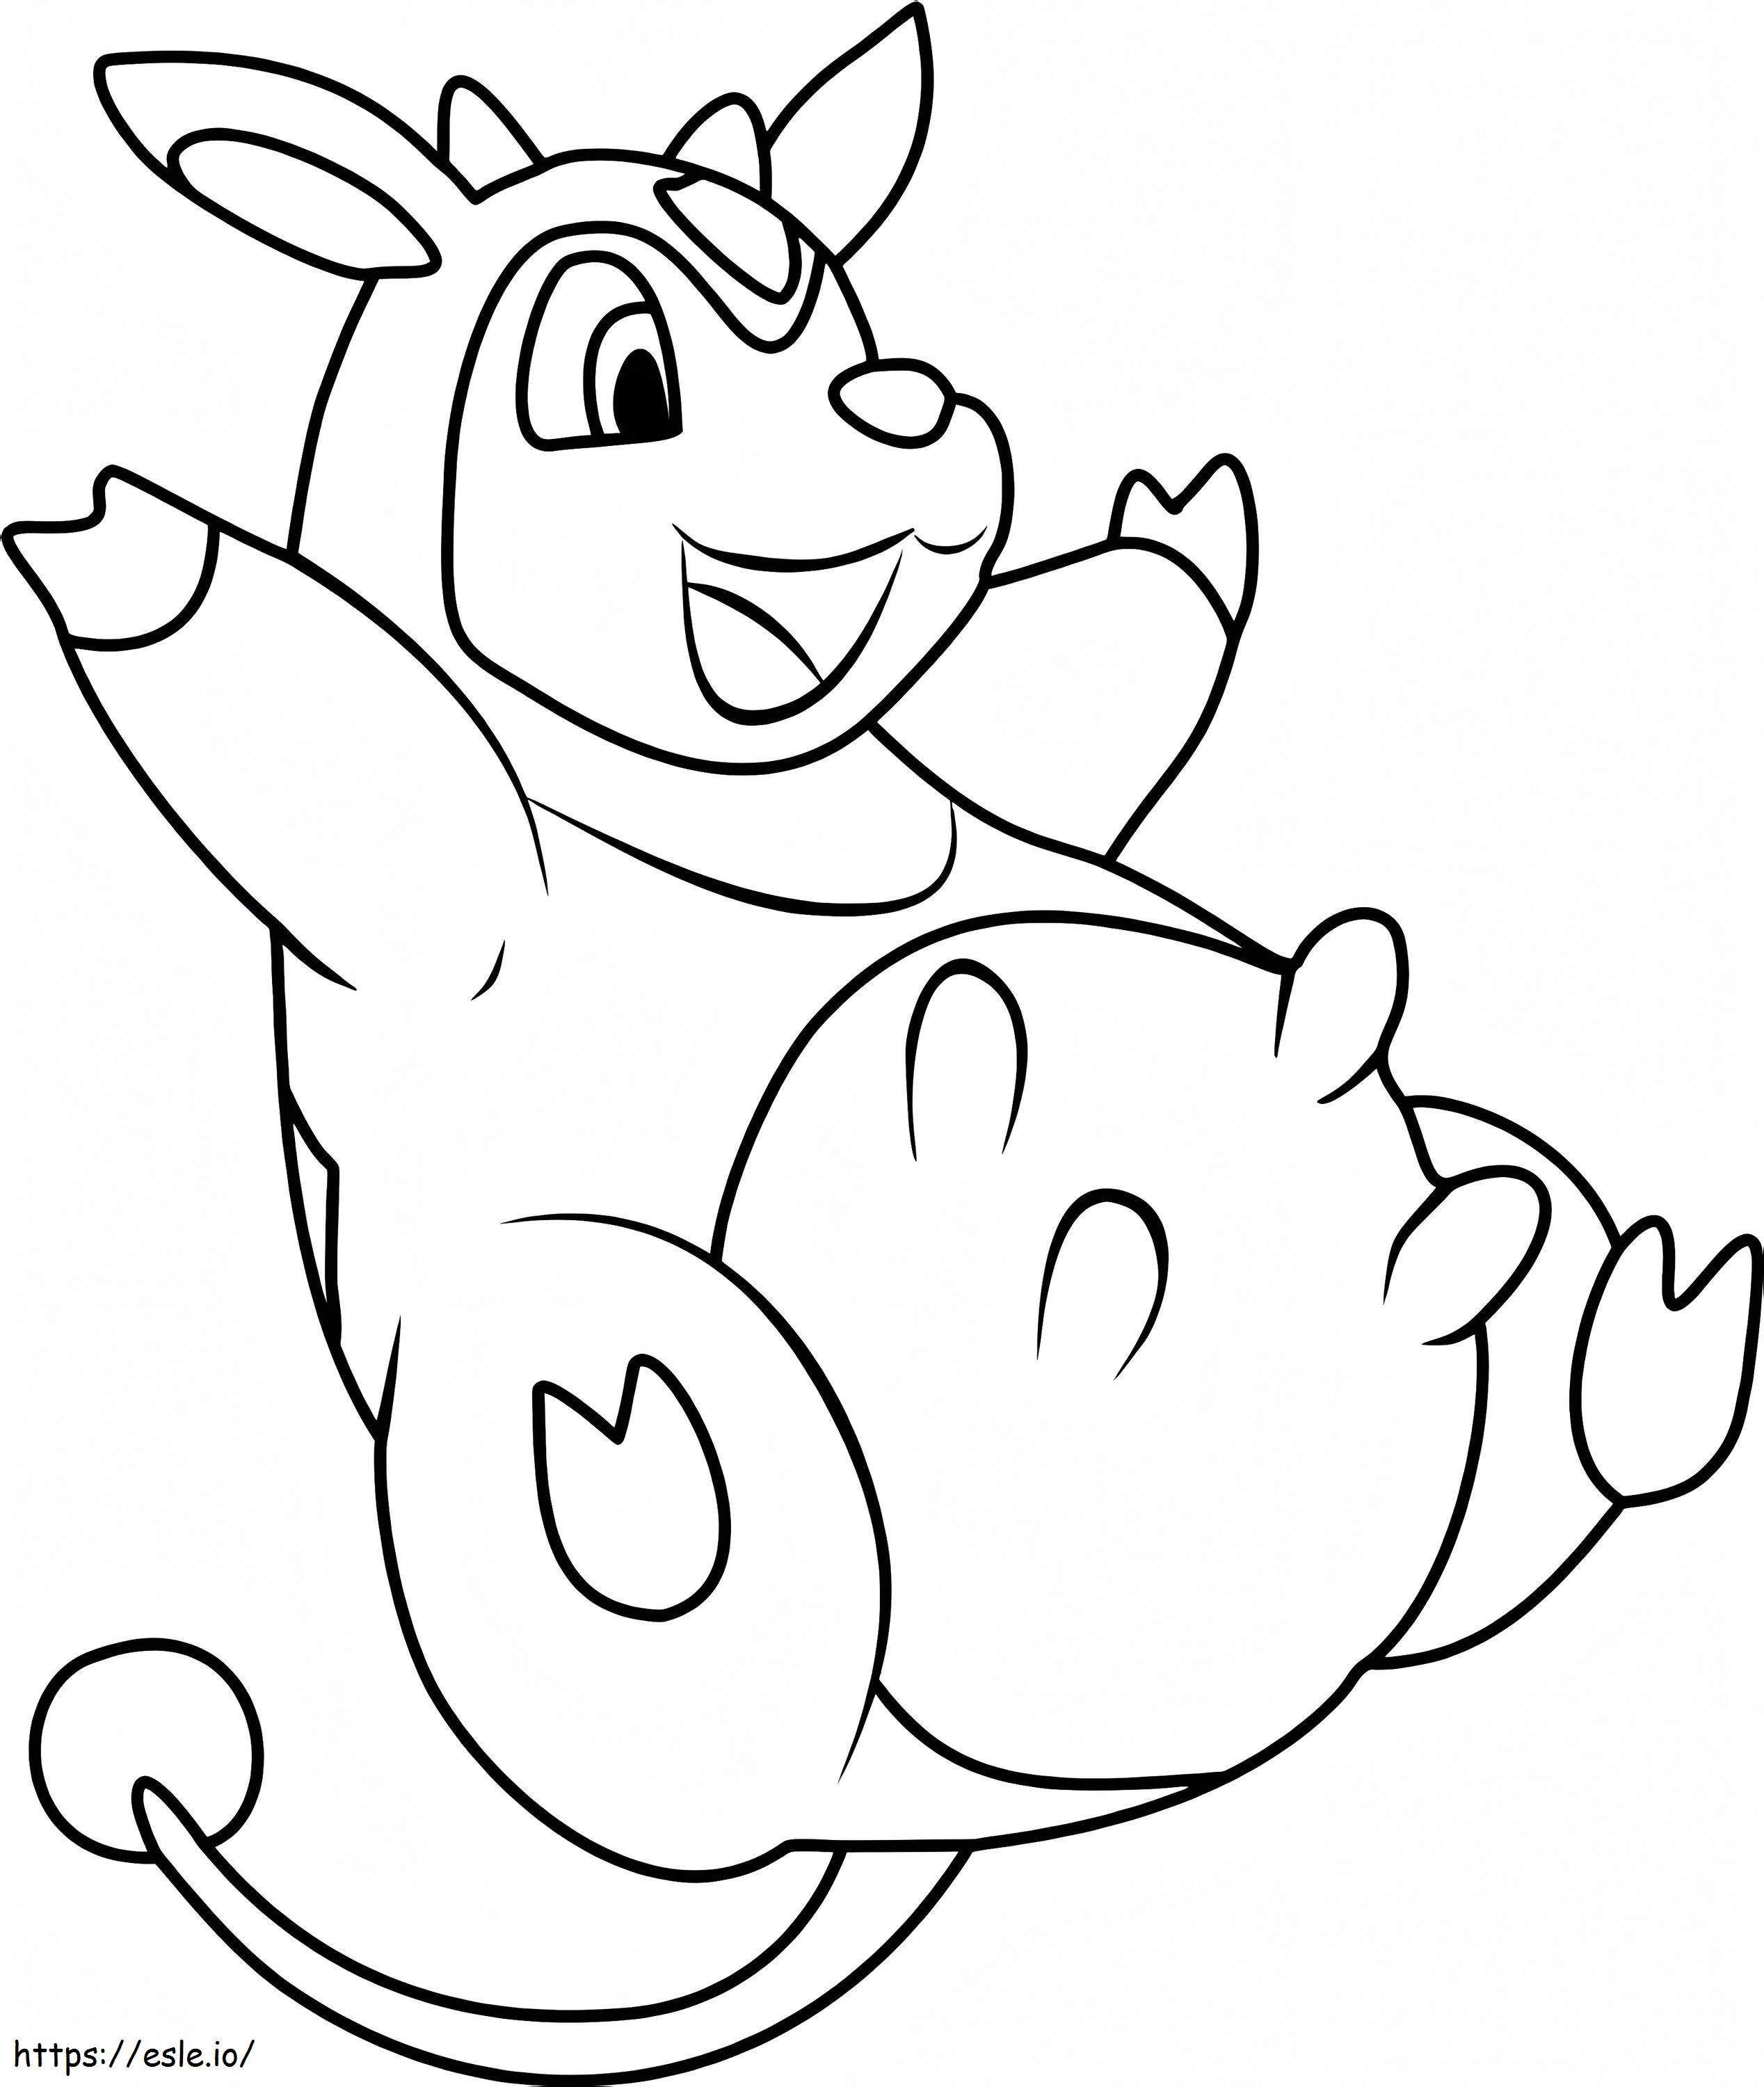 Pokemon Miltank coloring page